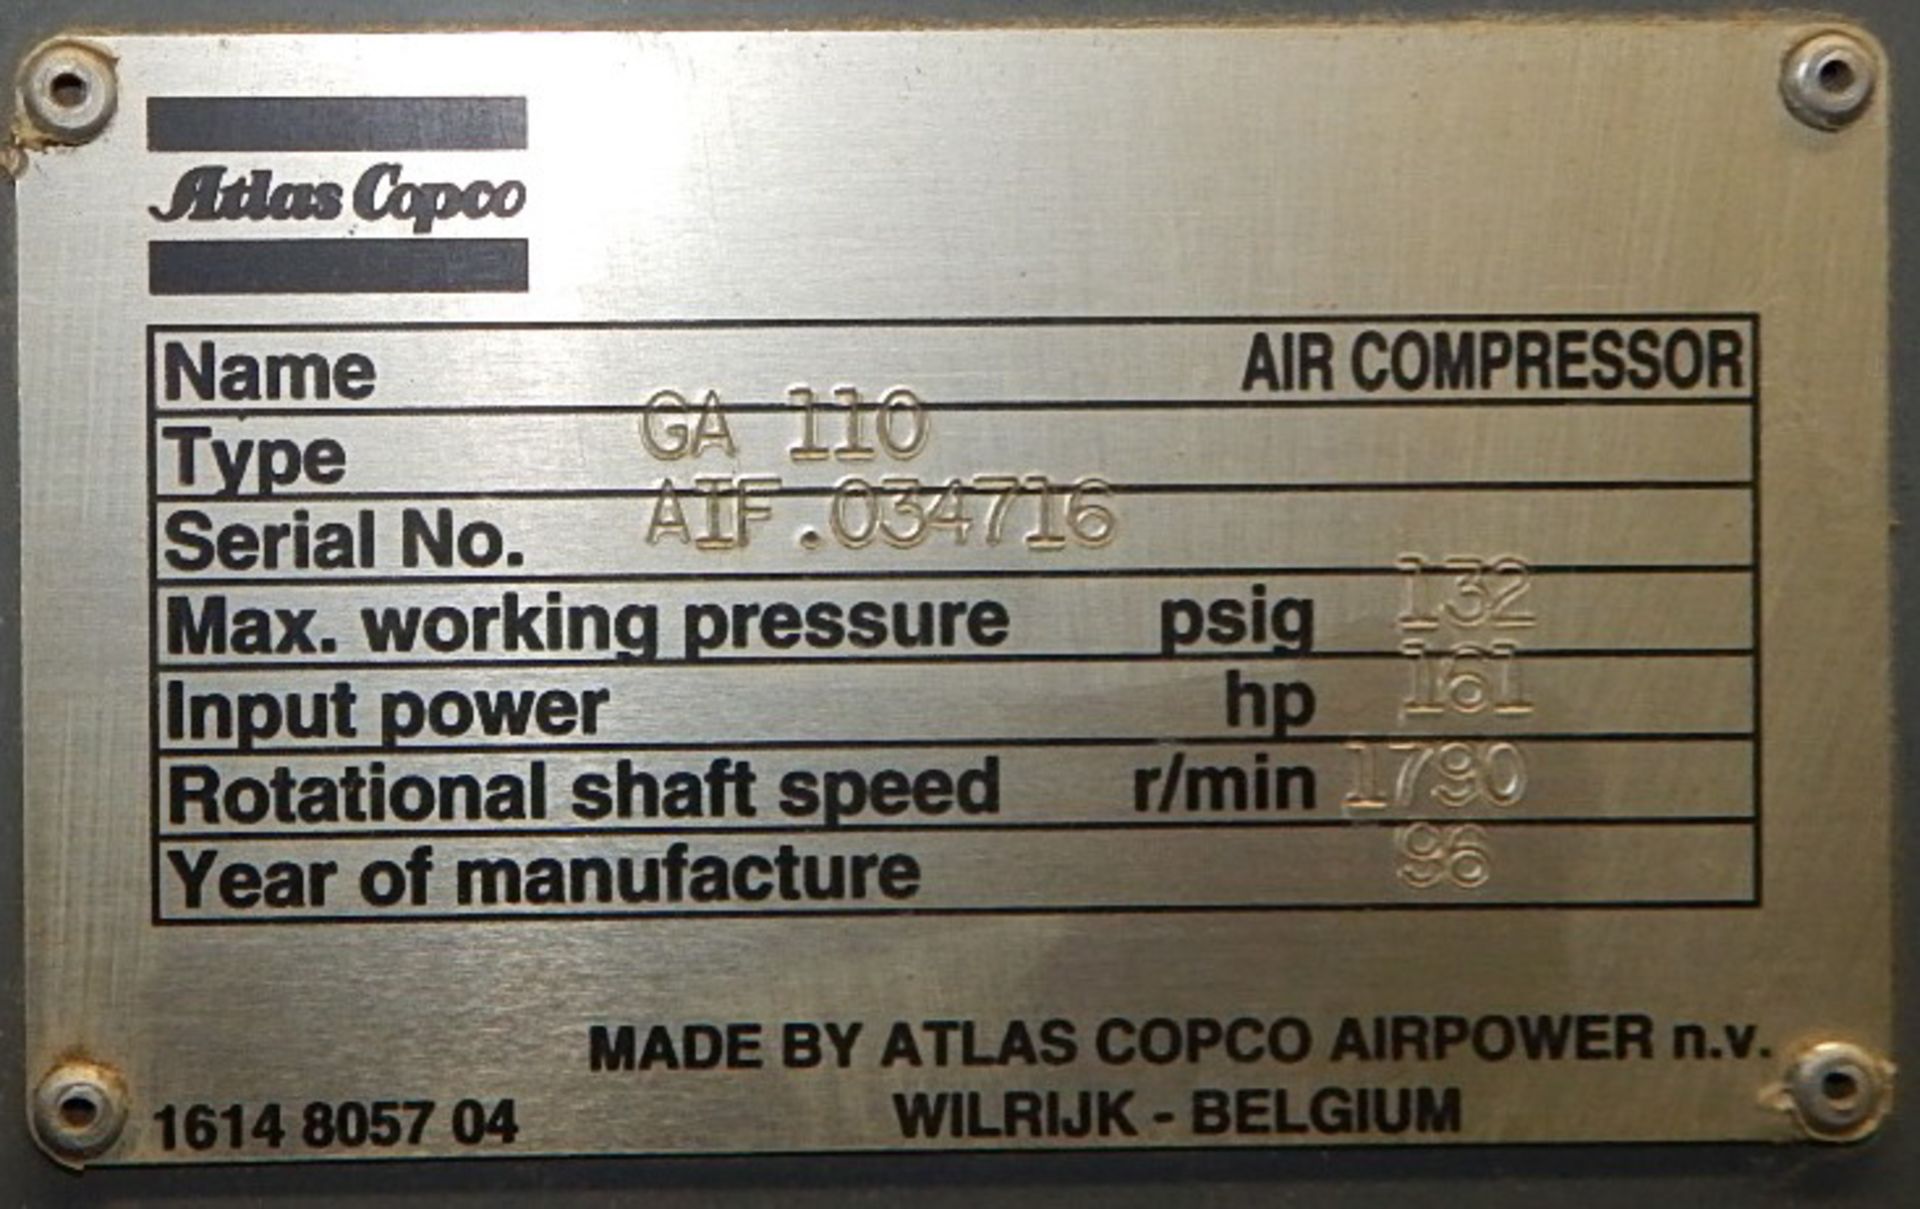 ATLAS COPCO GA110 ROTARY SCREW AIR COMPRESSOR WITH 161 HP, 132 PSI, S/N: AIF.034716 (CI) [RIGGING - Bild 5 aus 5